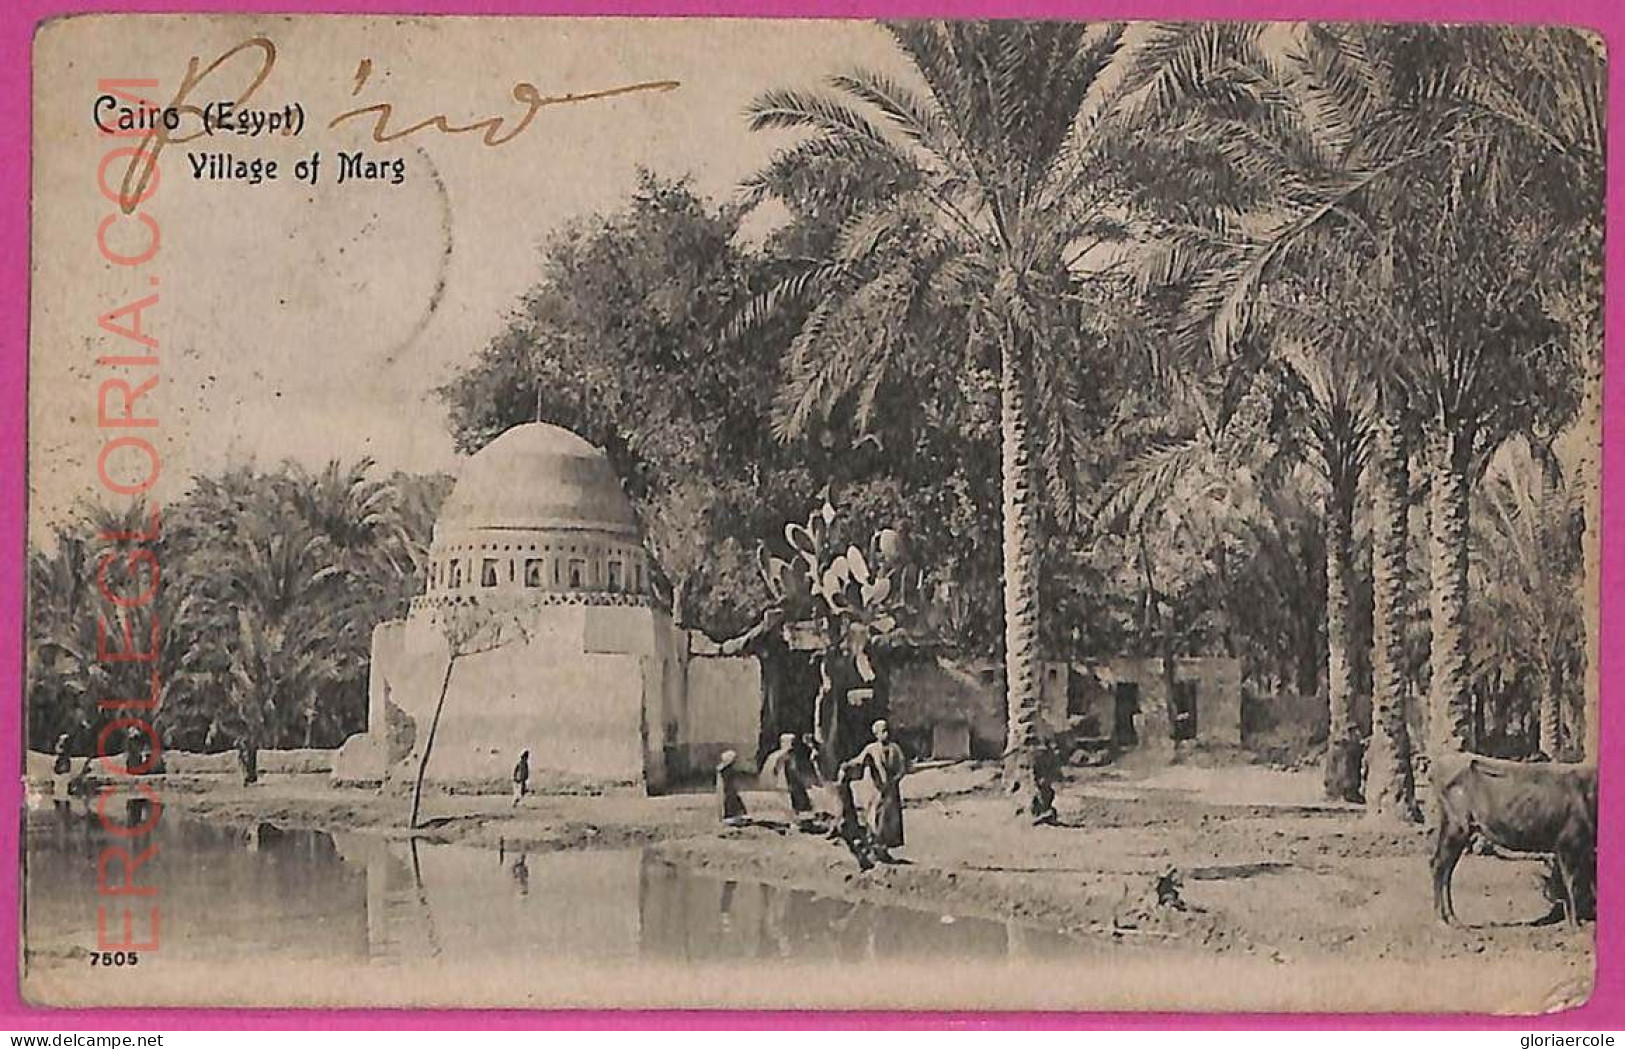 Ag3031 - EGYPT - VINTAGE POSTCARD - Cairo - 1905 - Caïro